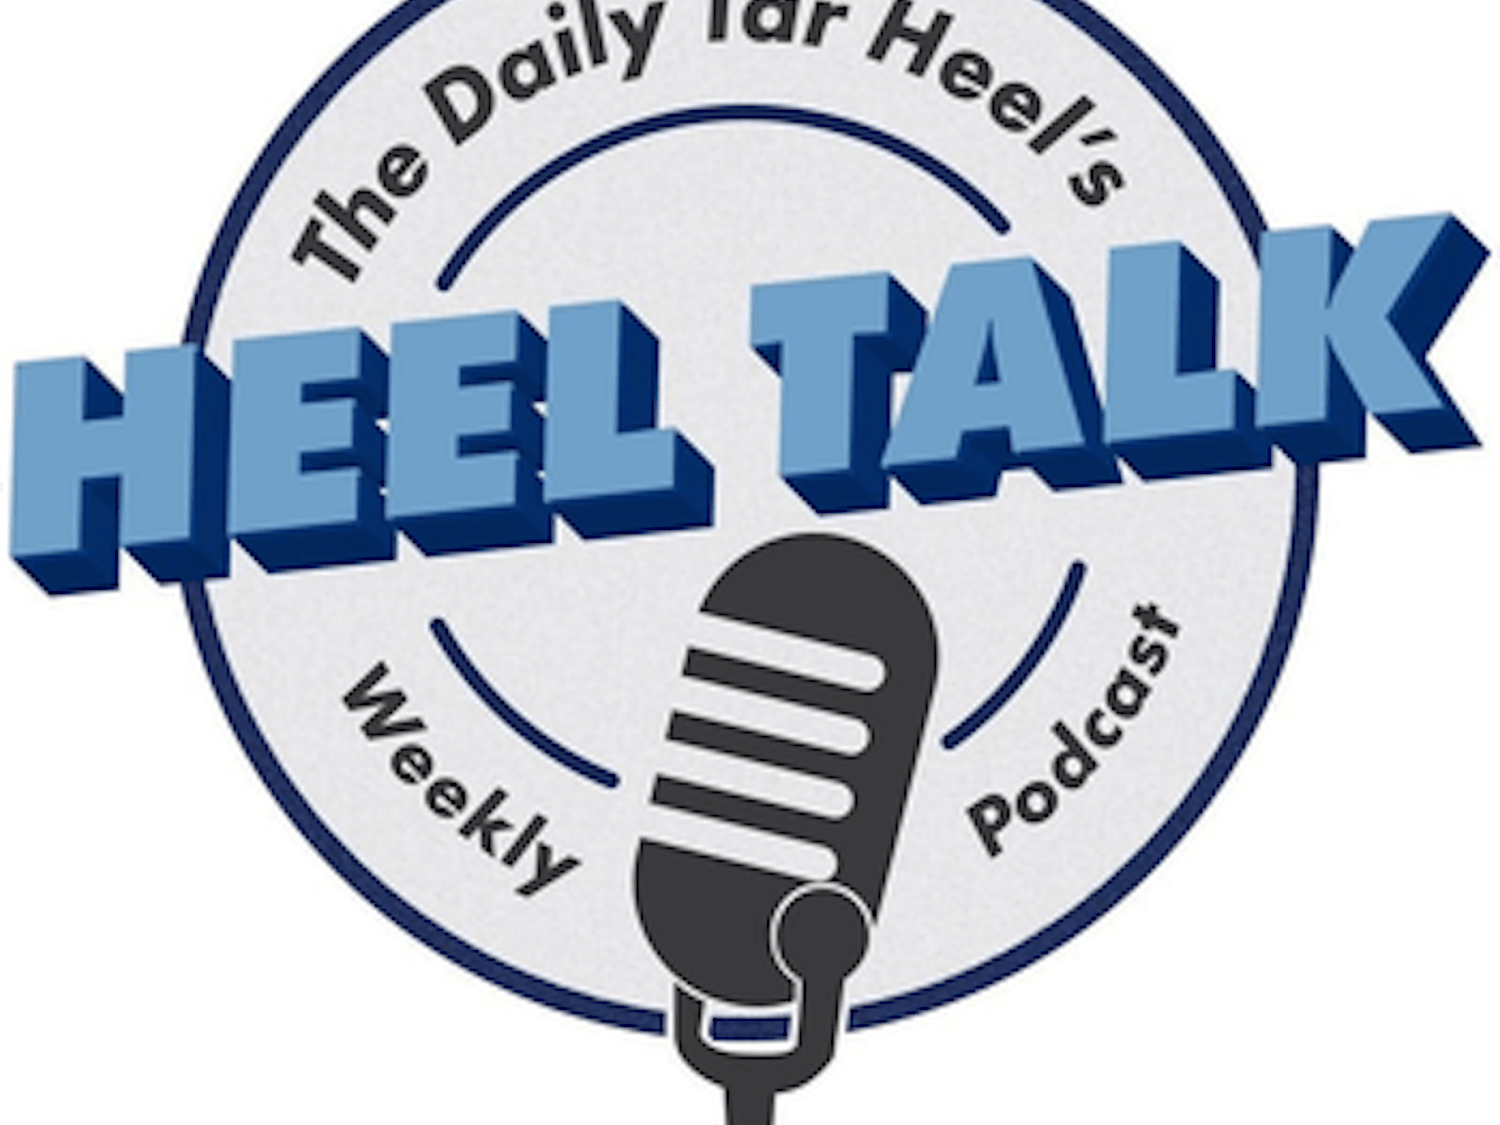 Listen: Heel Talk